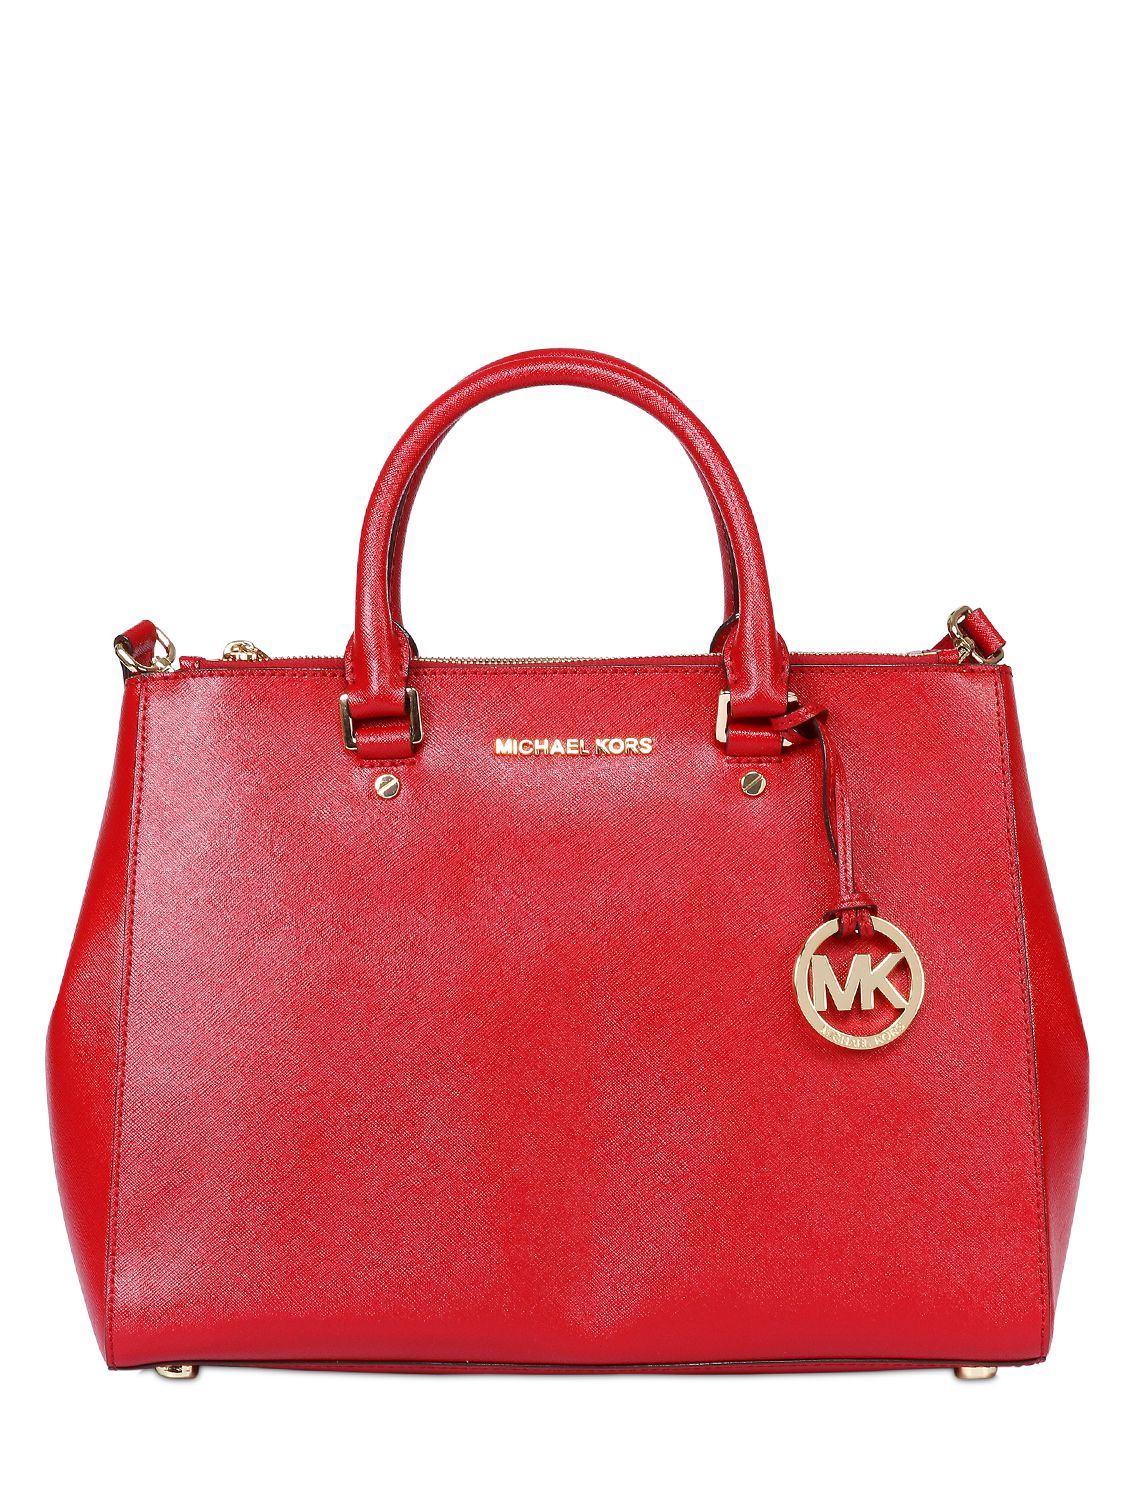 Michael Kors Patent Leather Handbags | semashow.com